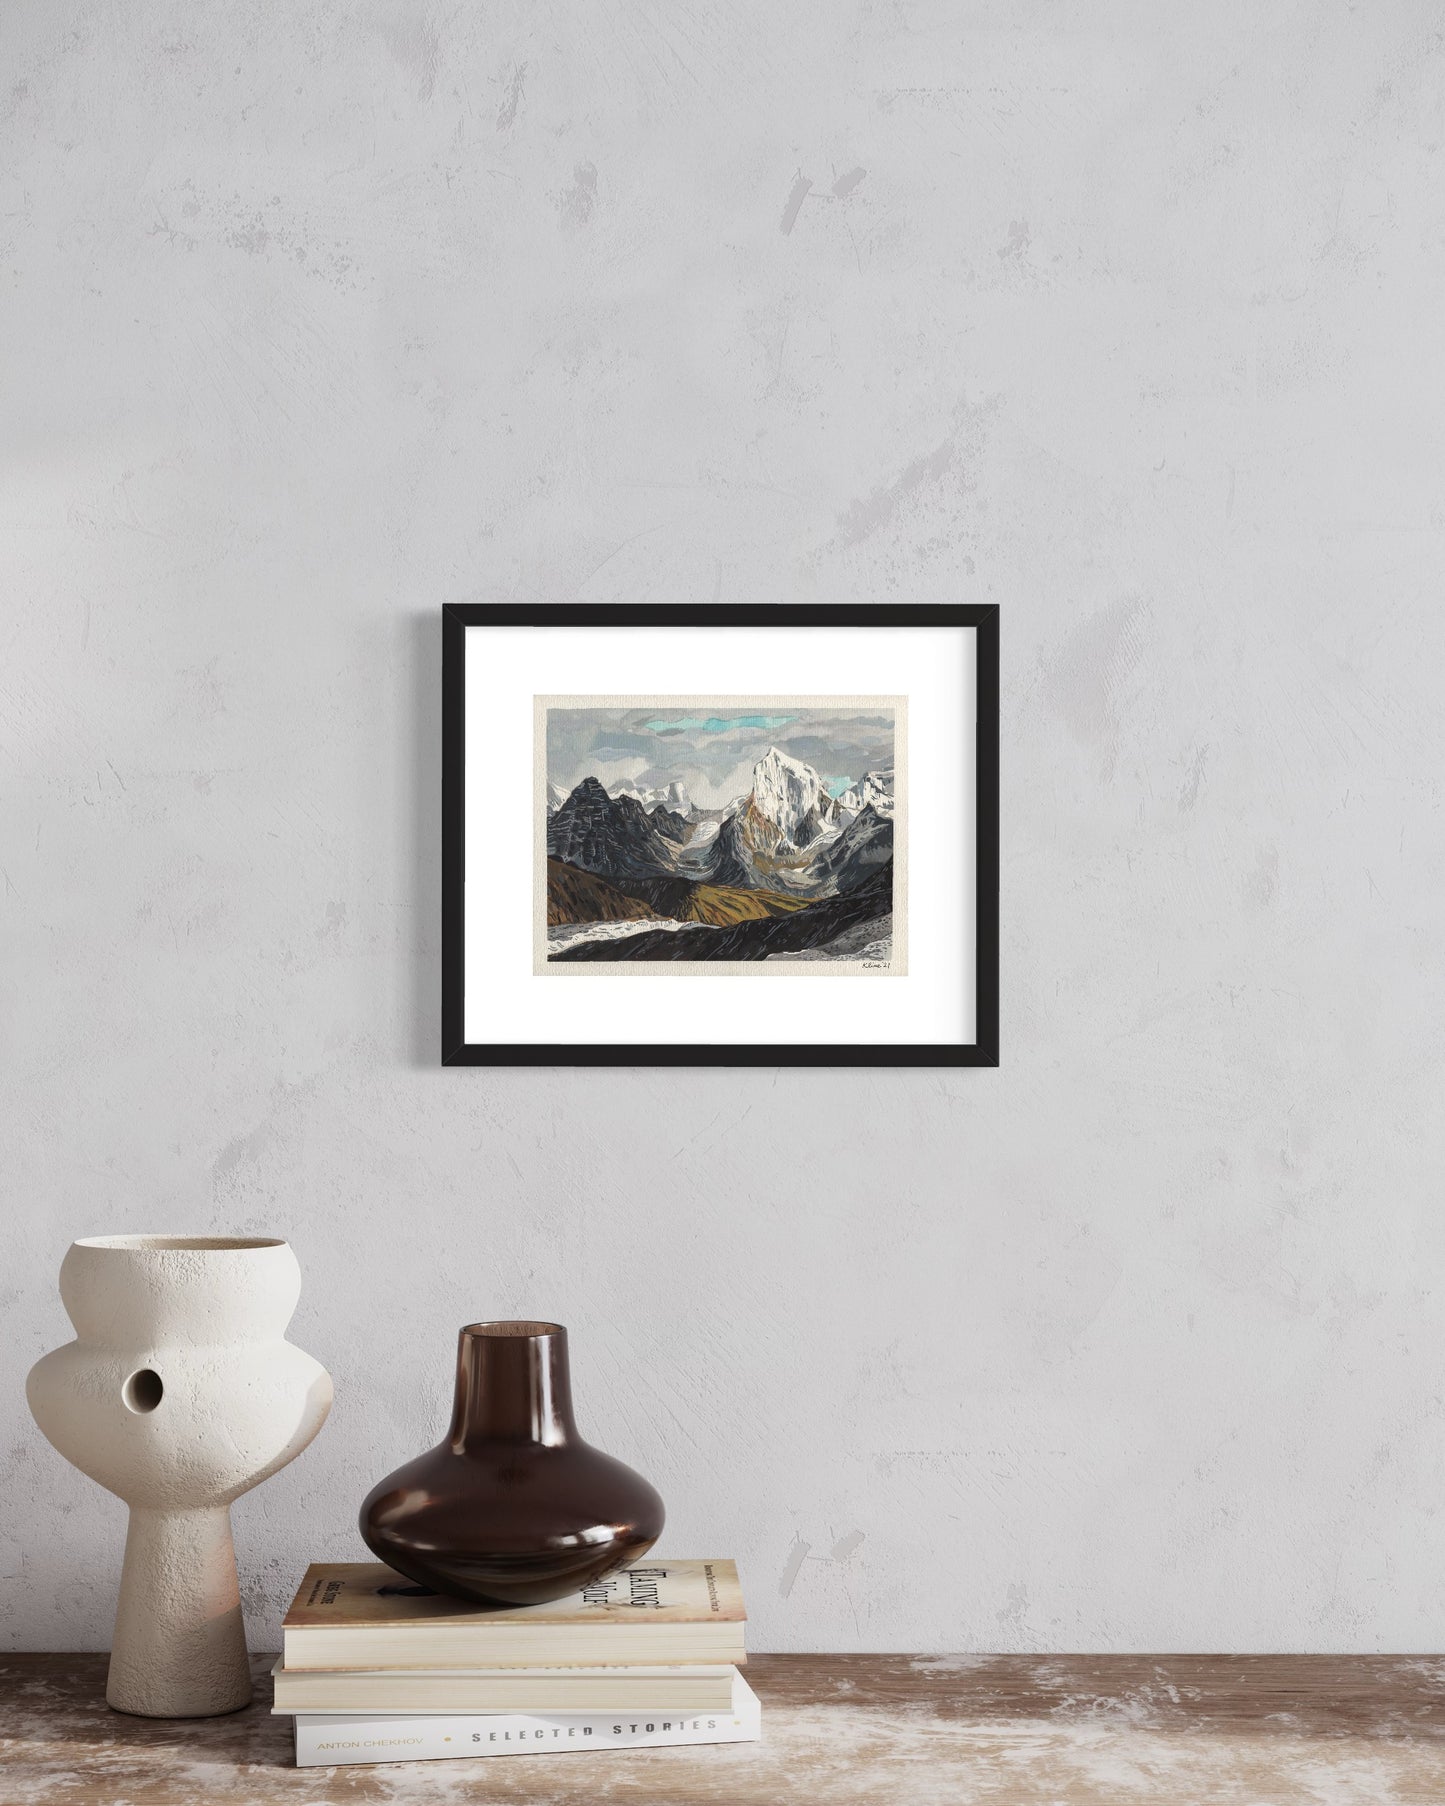 (SOLD) Himalayan Mountains. Watercolor and Gouache. 12" x 9". John Kline Artwork